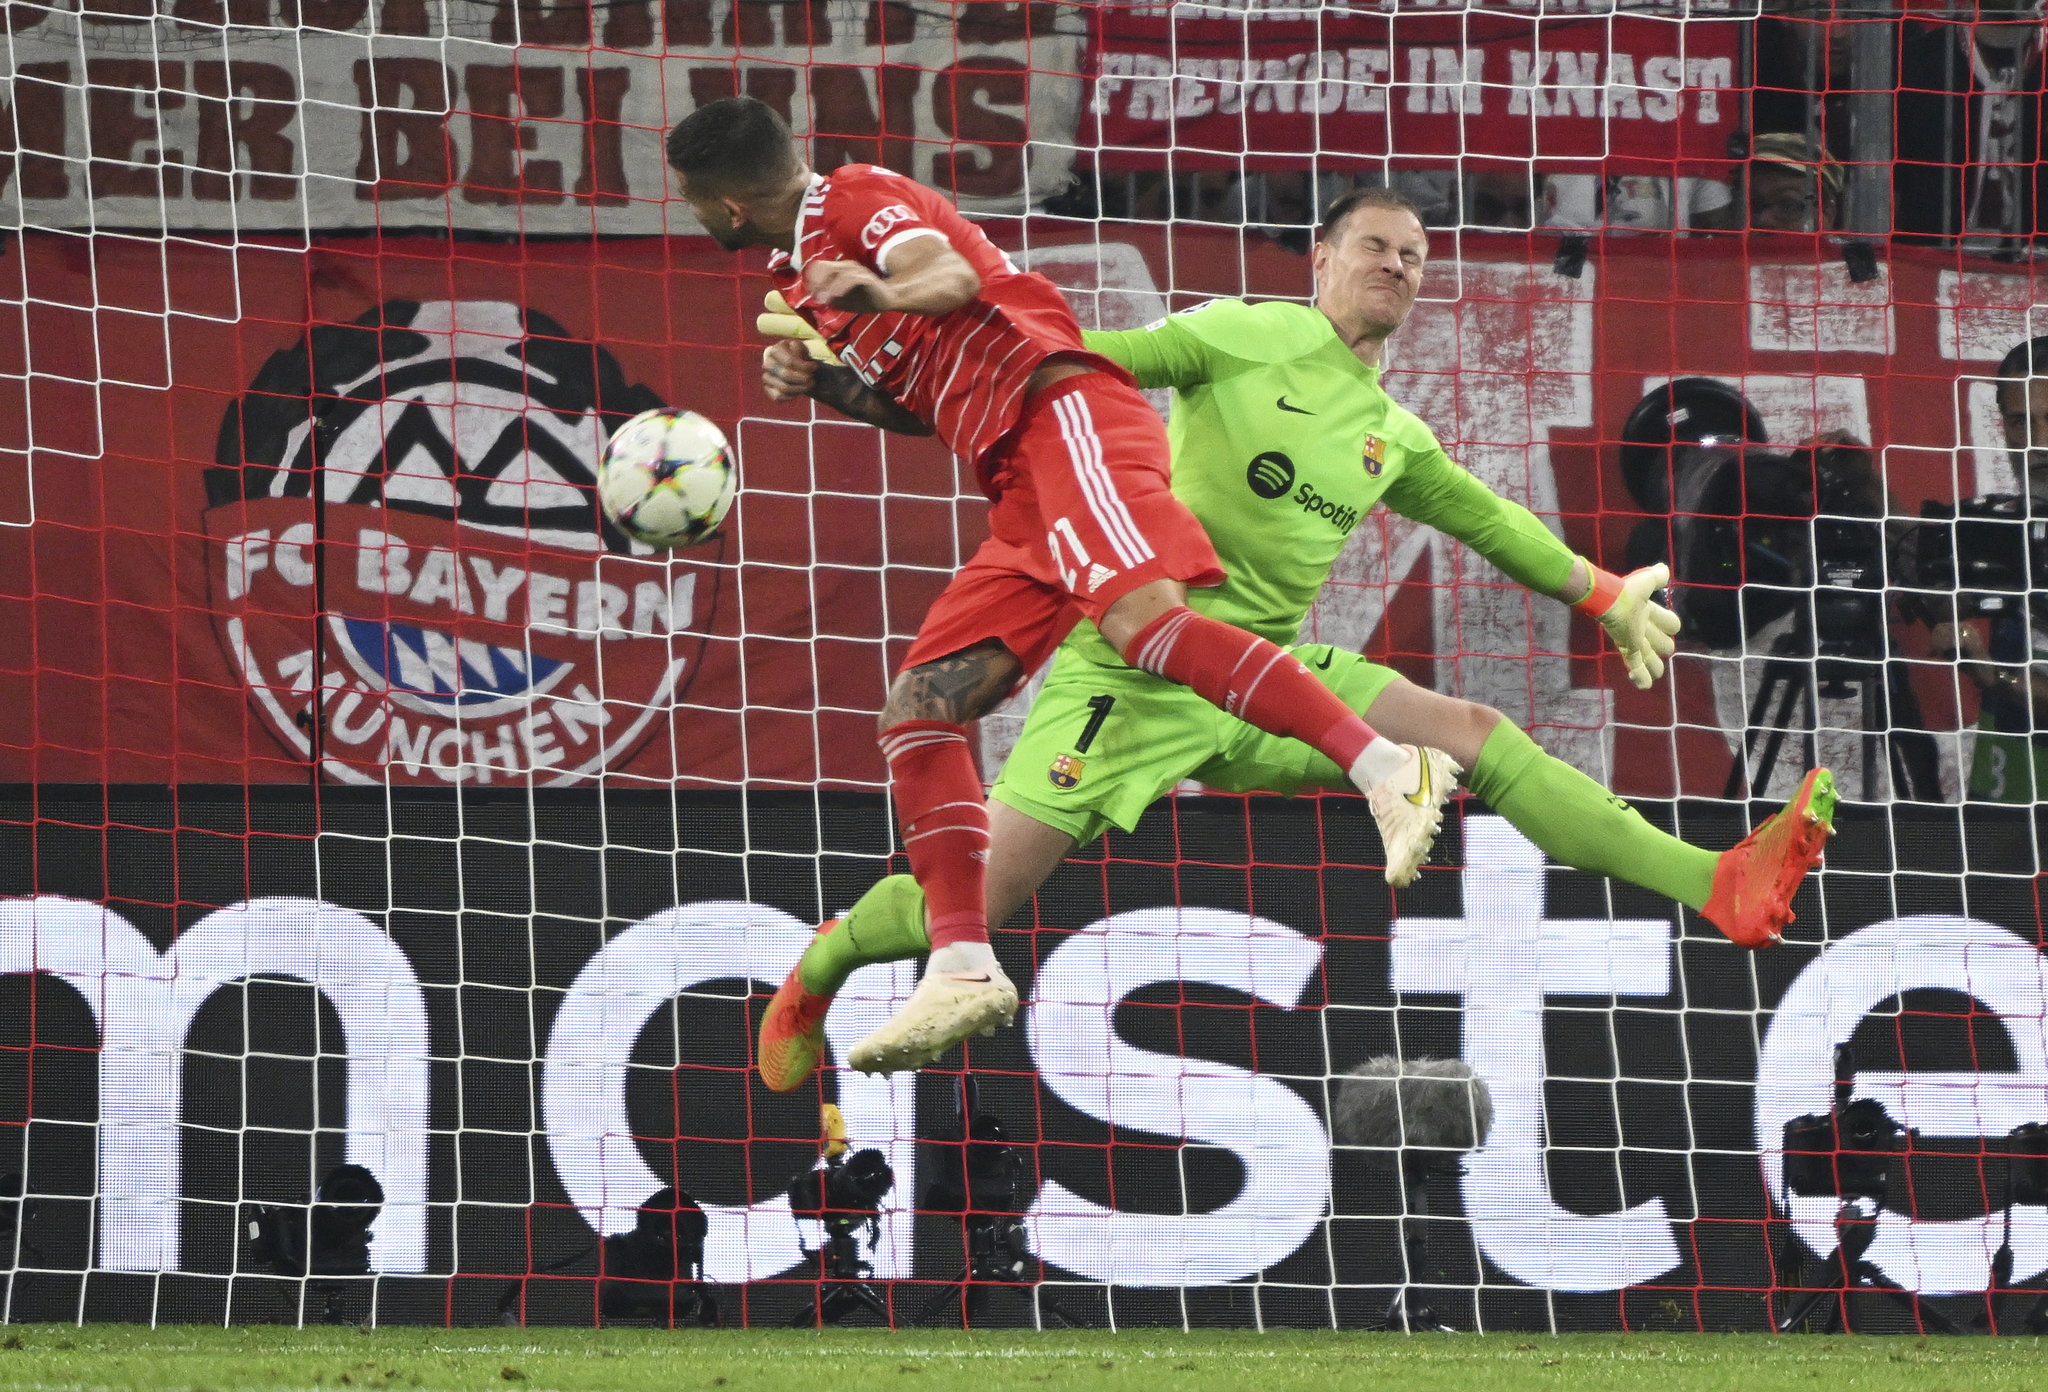 Bayern Munich's Lucas Hernandez scores